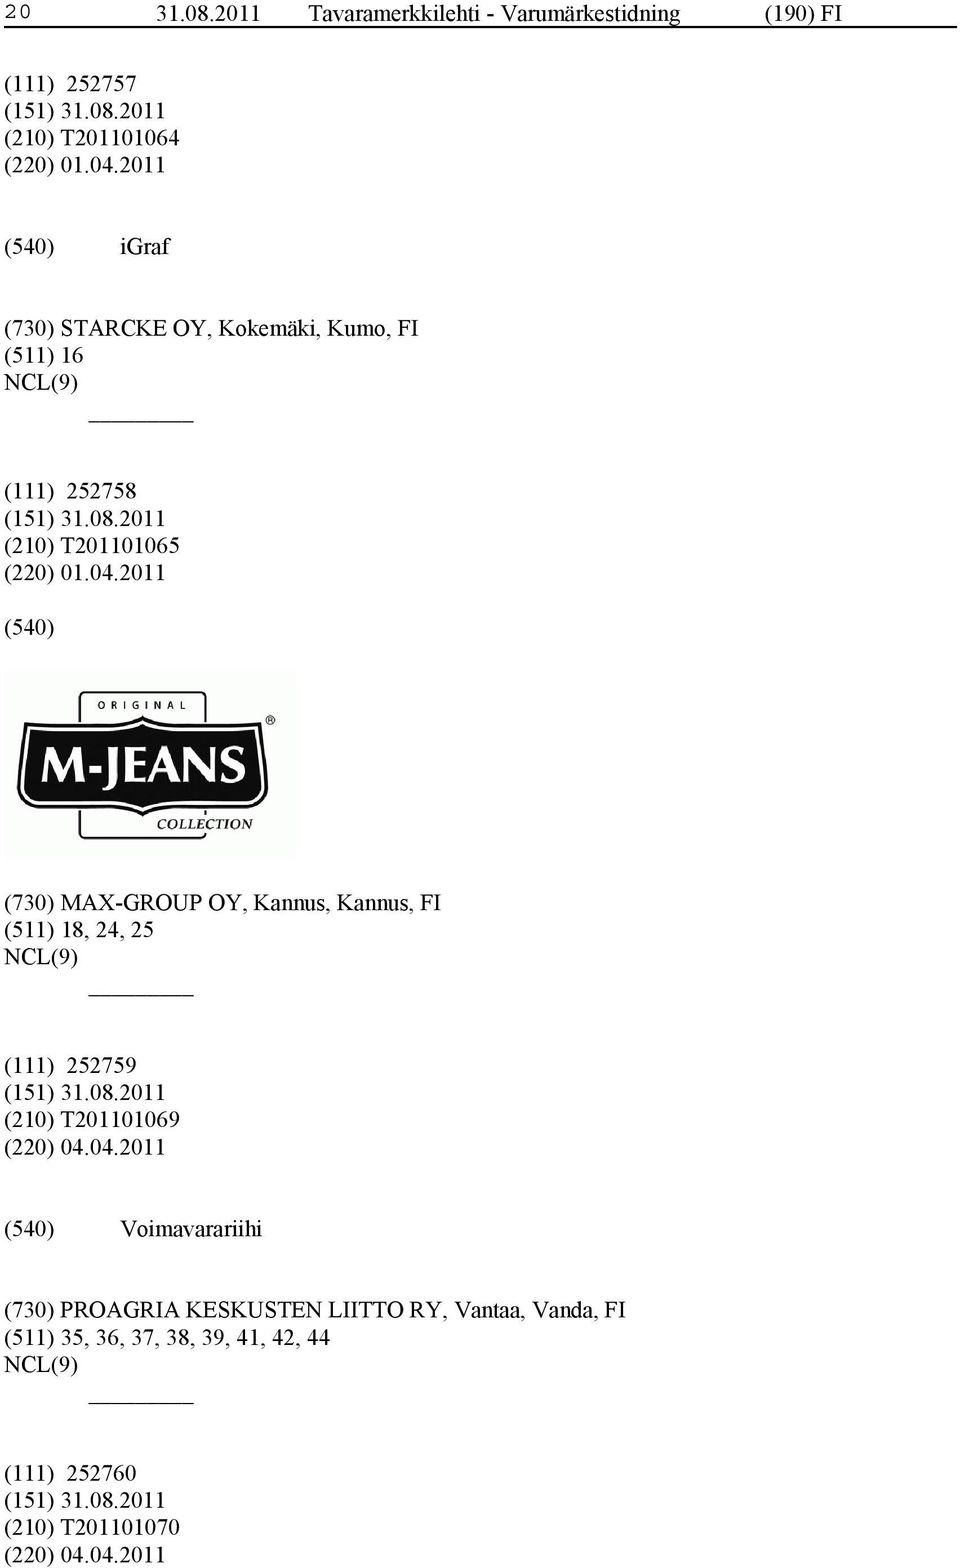 2011 (730) MAX-GROUP OY, Kannus, Kannus, FI (511) 18, 24, 25 (111) 252759 (210) T201101069 (220) 04.